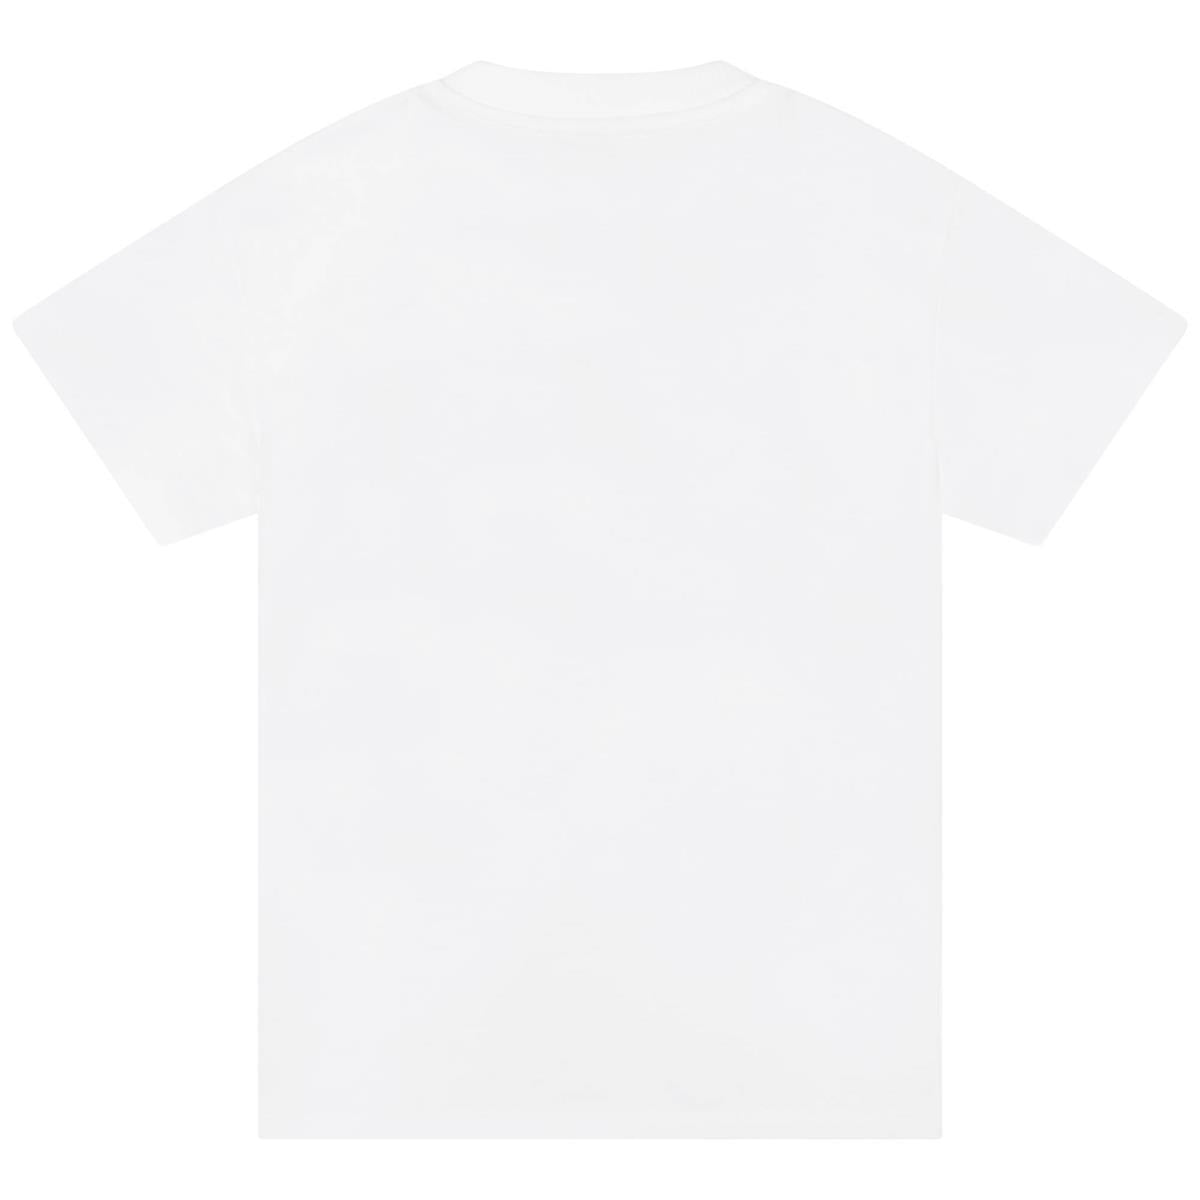 Boys & Girls White T-Shirt